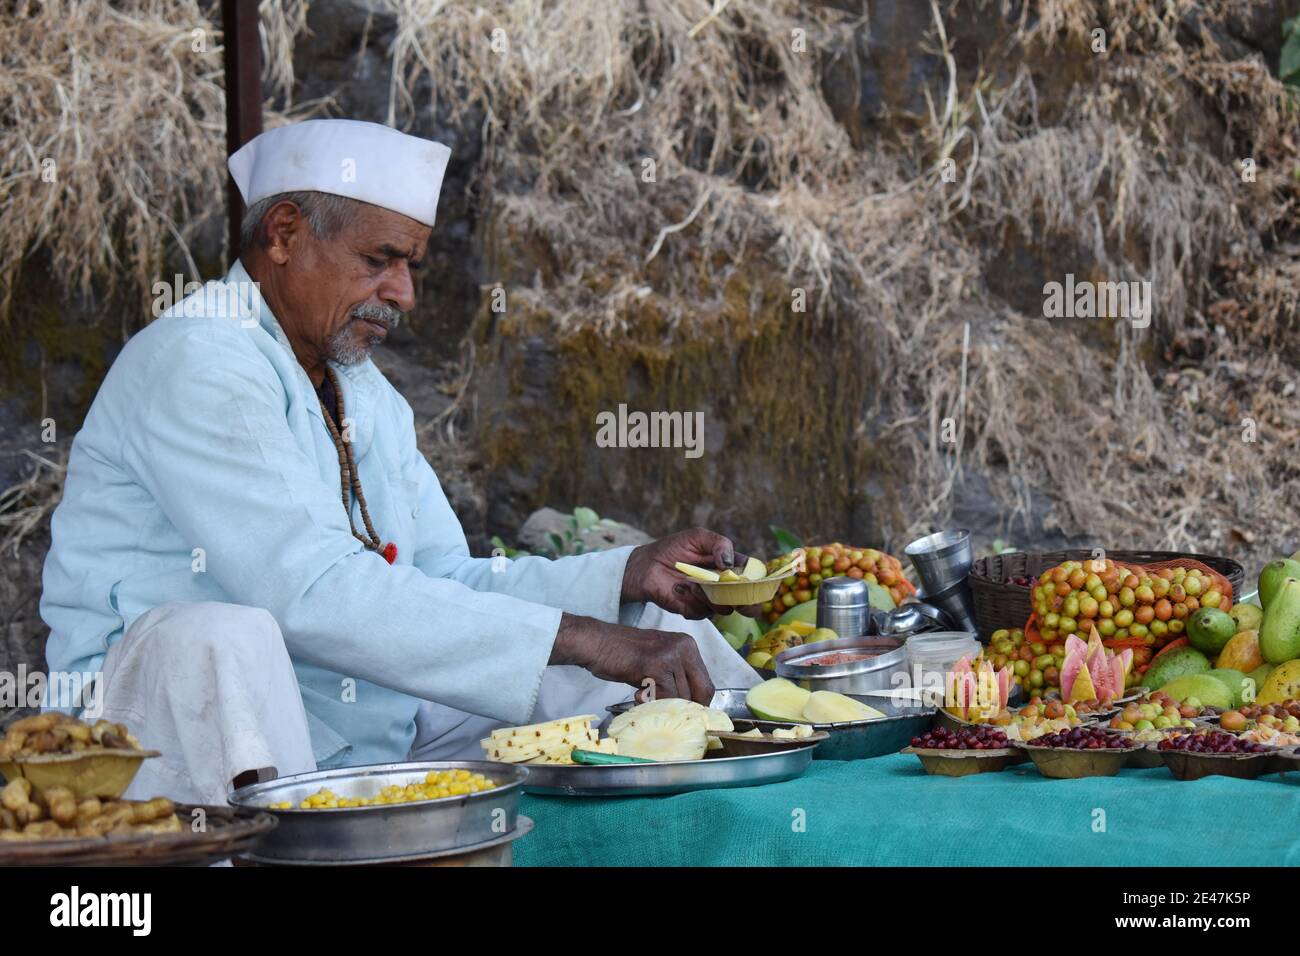 26th Dec 2020, Pune , Maharashtra,  India. Vendor selling fruits, berries, peanuts and corns at Sinhagad Fort Stock Photo